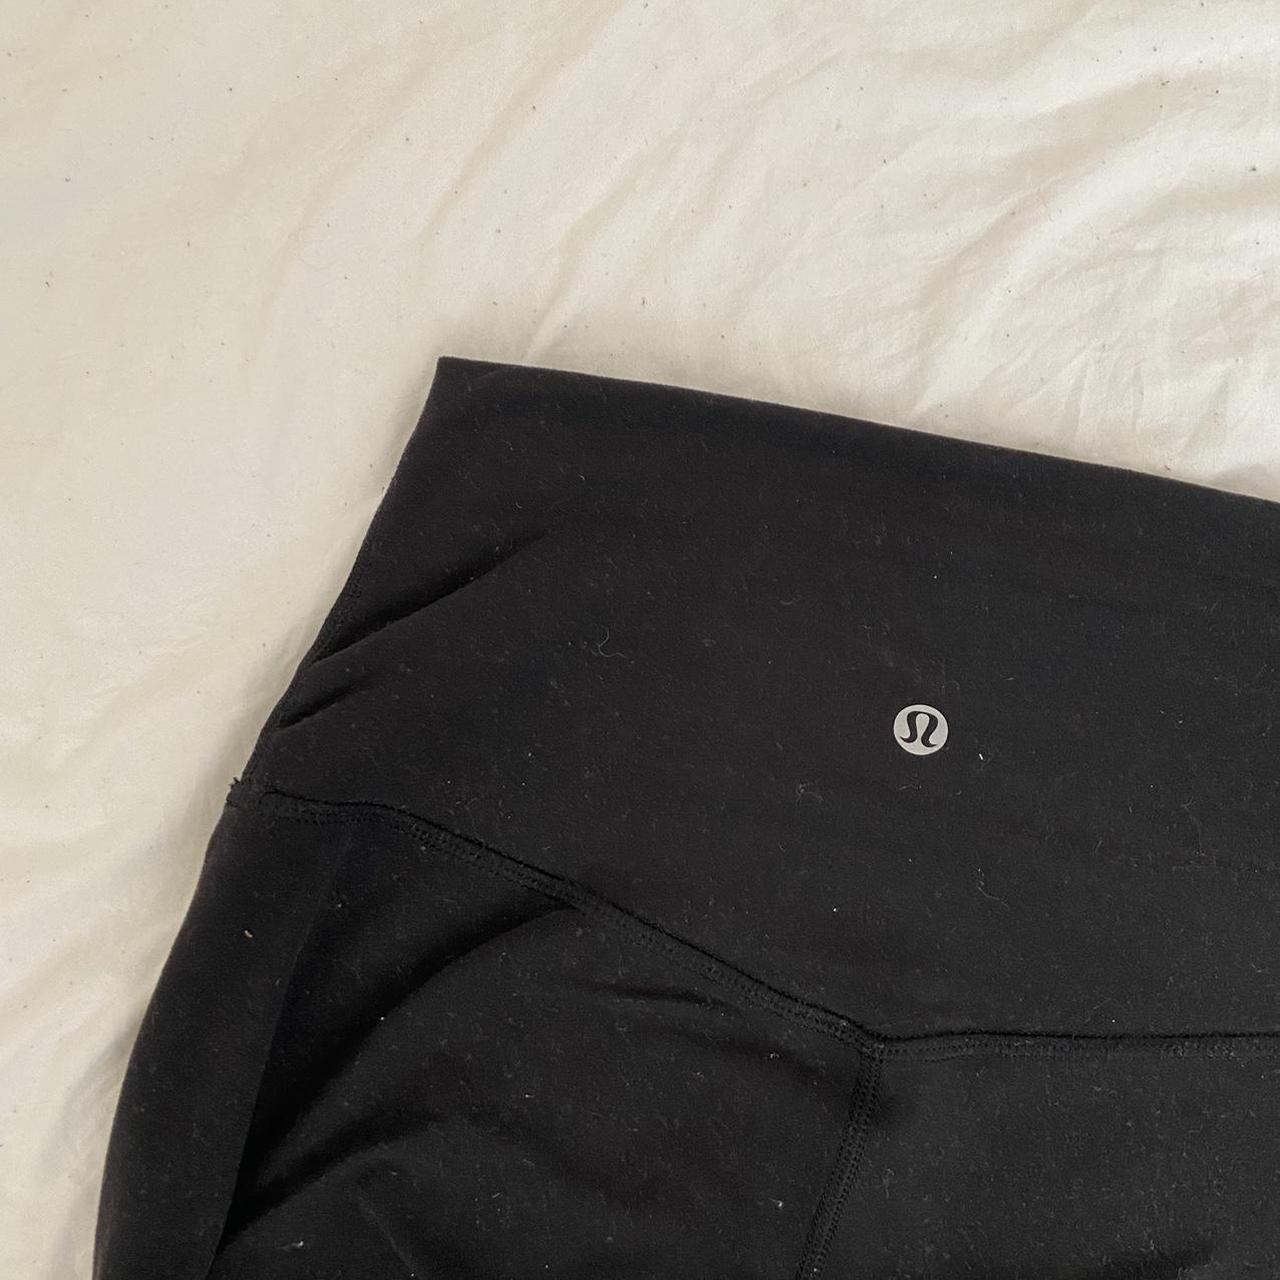 Capri Lululemon leggings 🍋✨ - the tag is ripped off - Depop